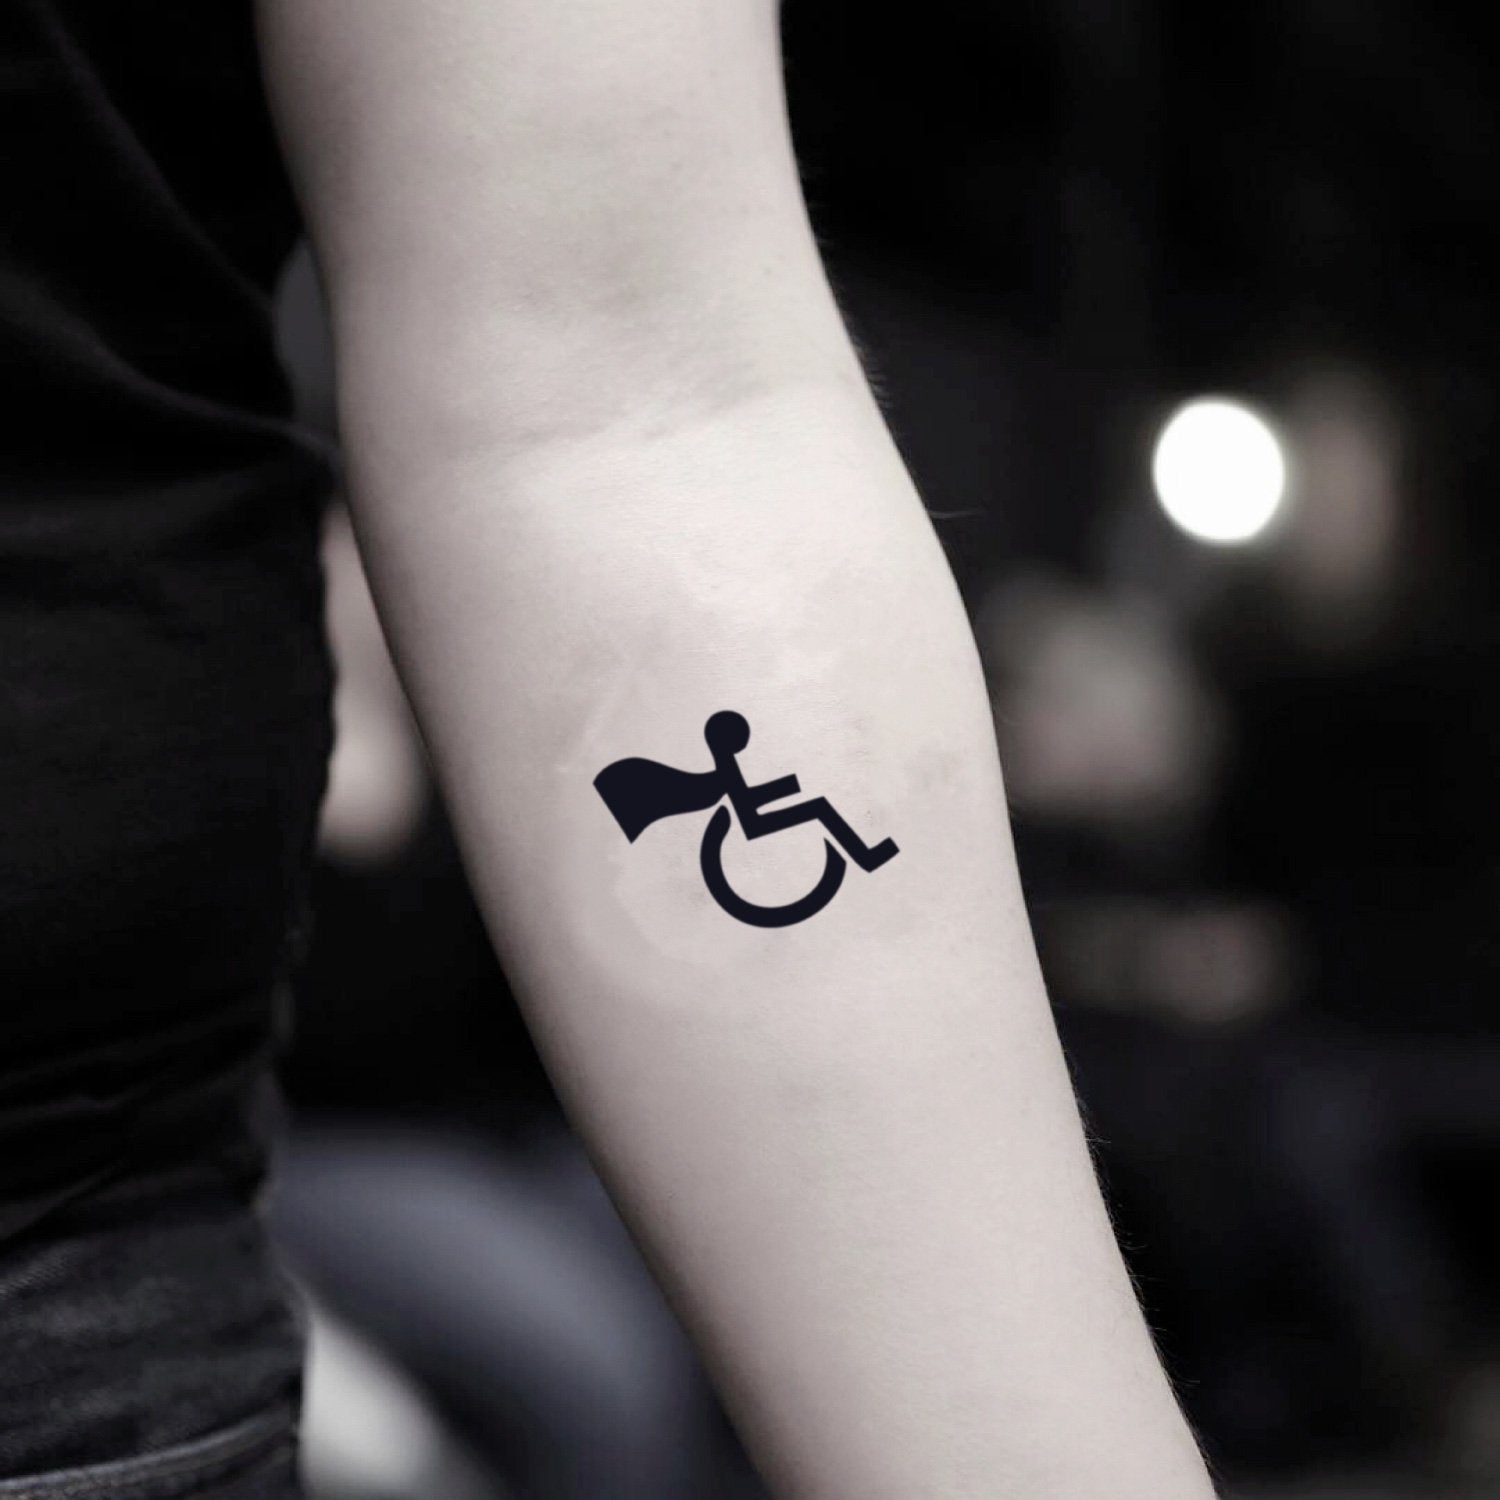 fake small wheelchair disability minimalist temporary tattoo sticker design idea on inner arm